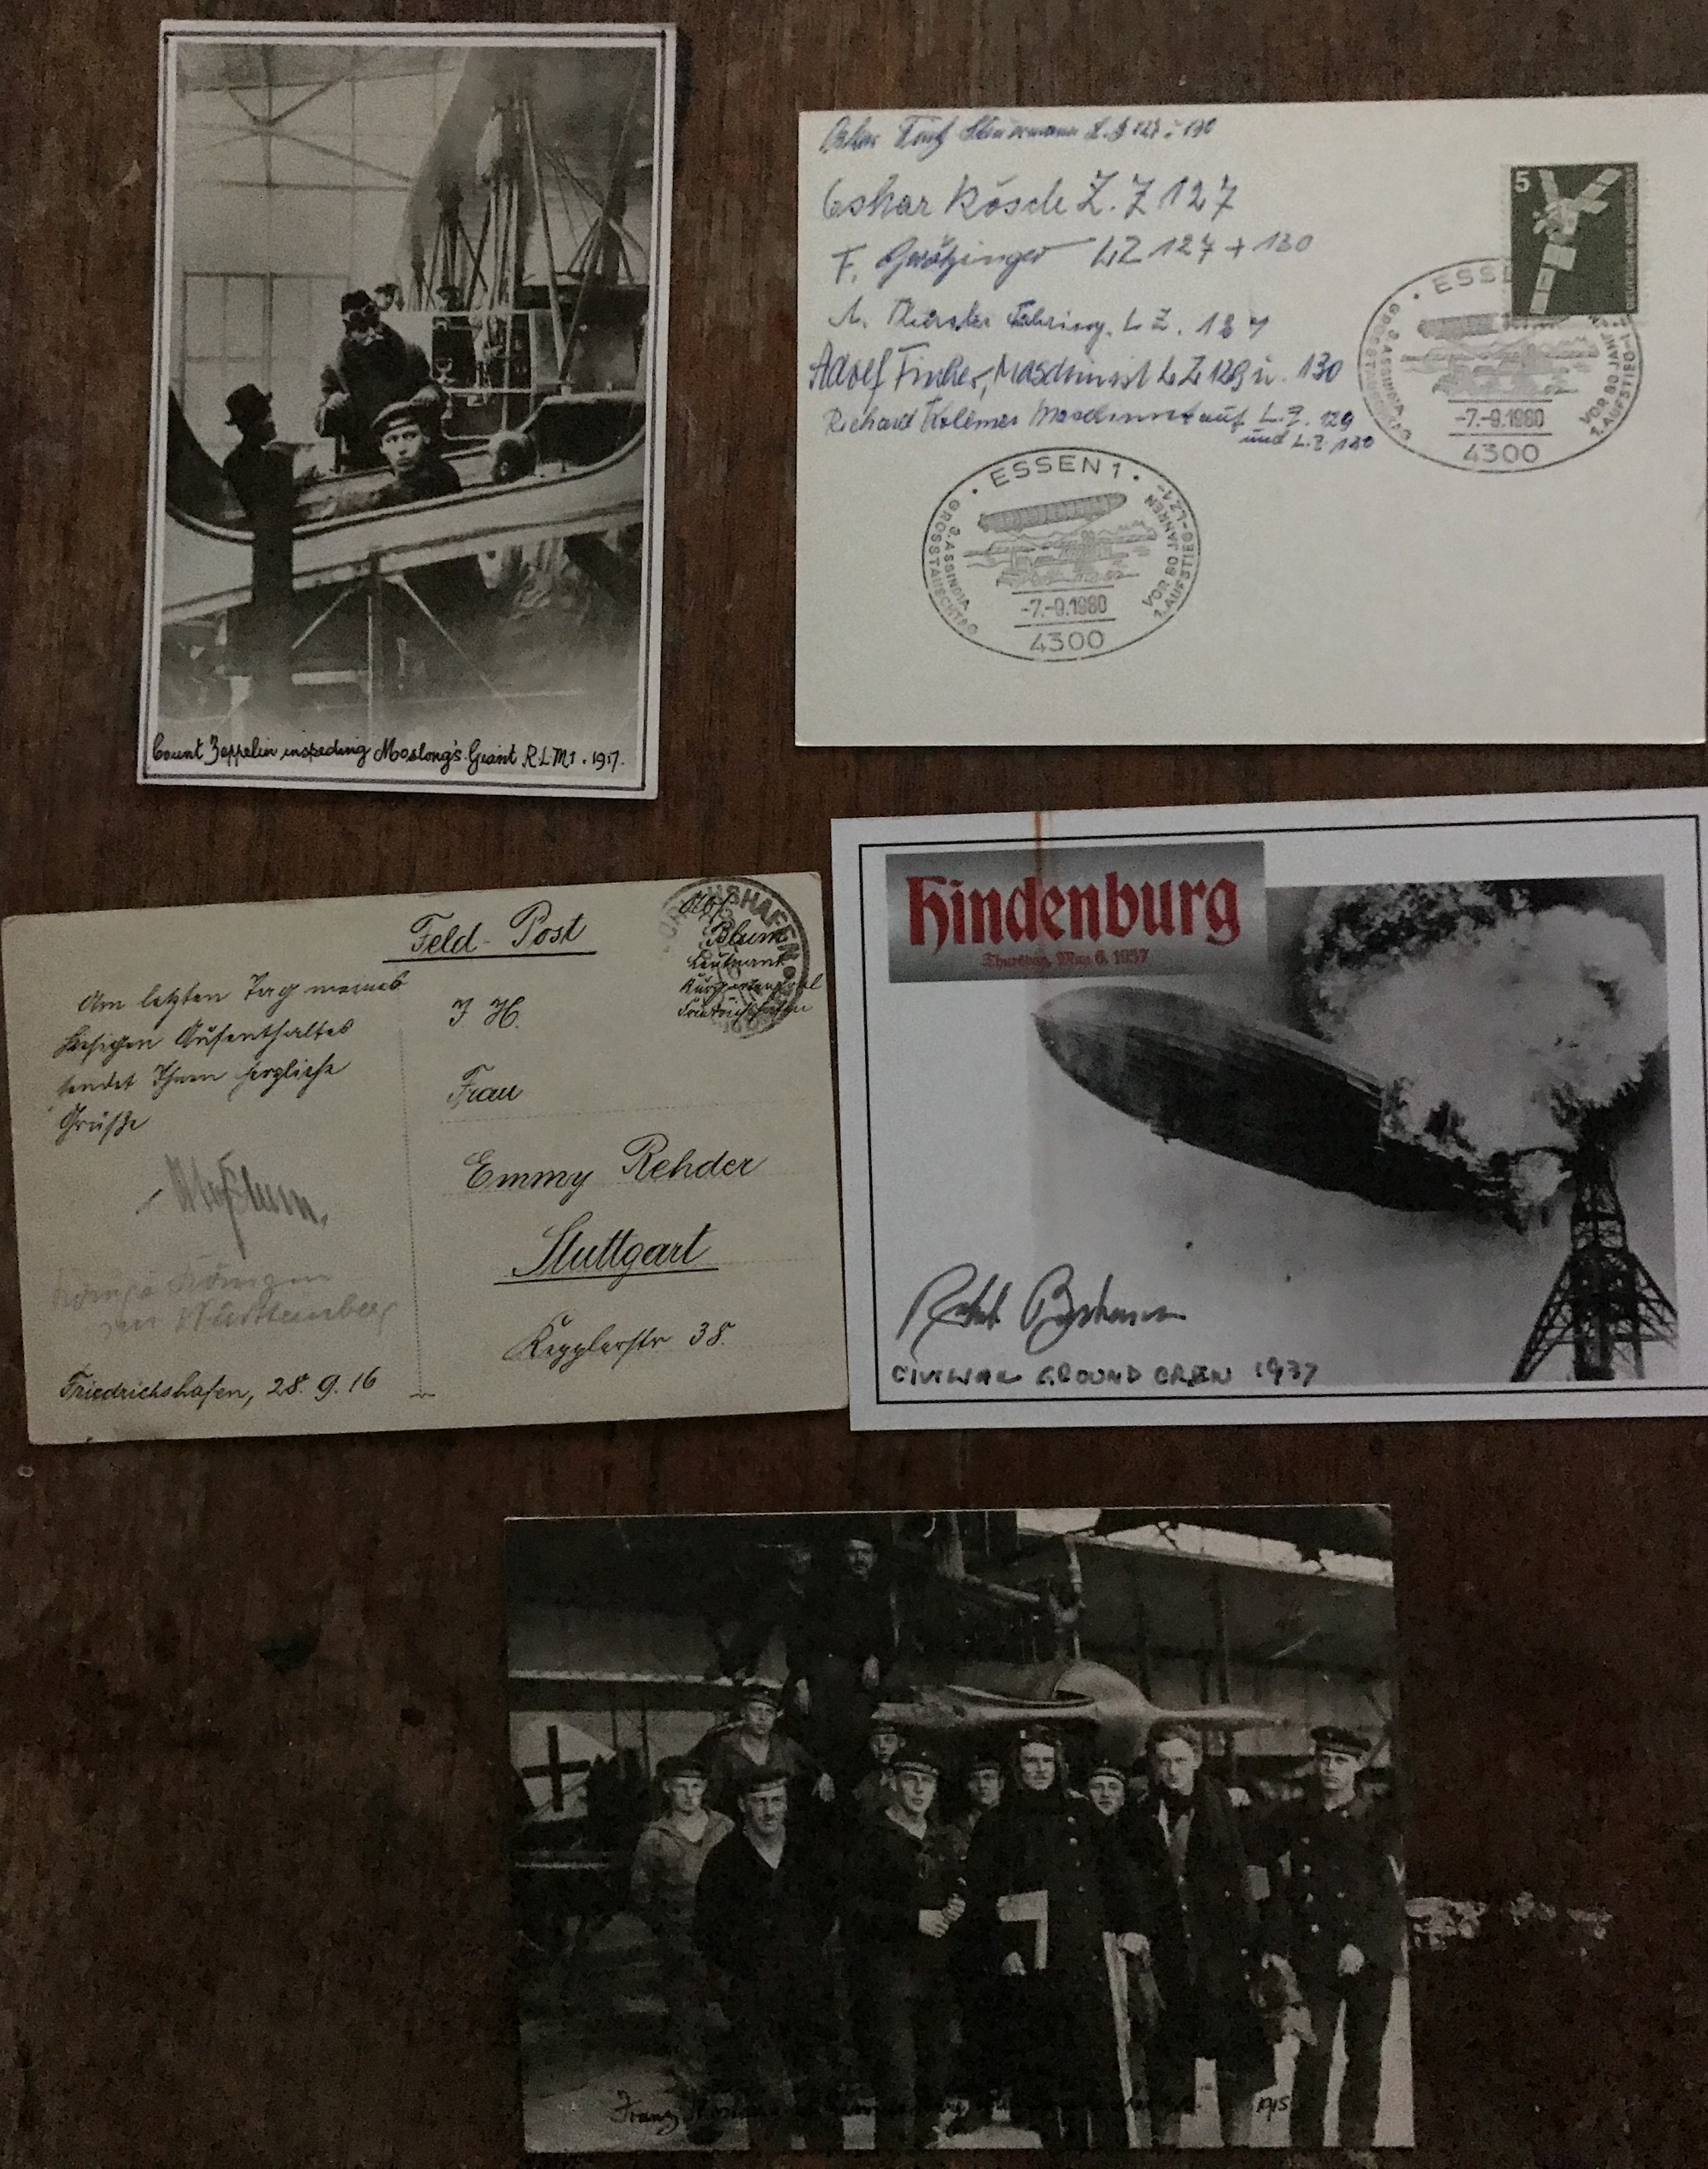 Zeppelin crew veterans collections inc signed card with Six veterans inc Adolf Fischer, Richard